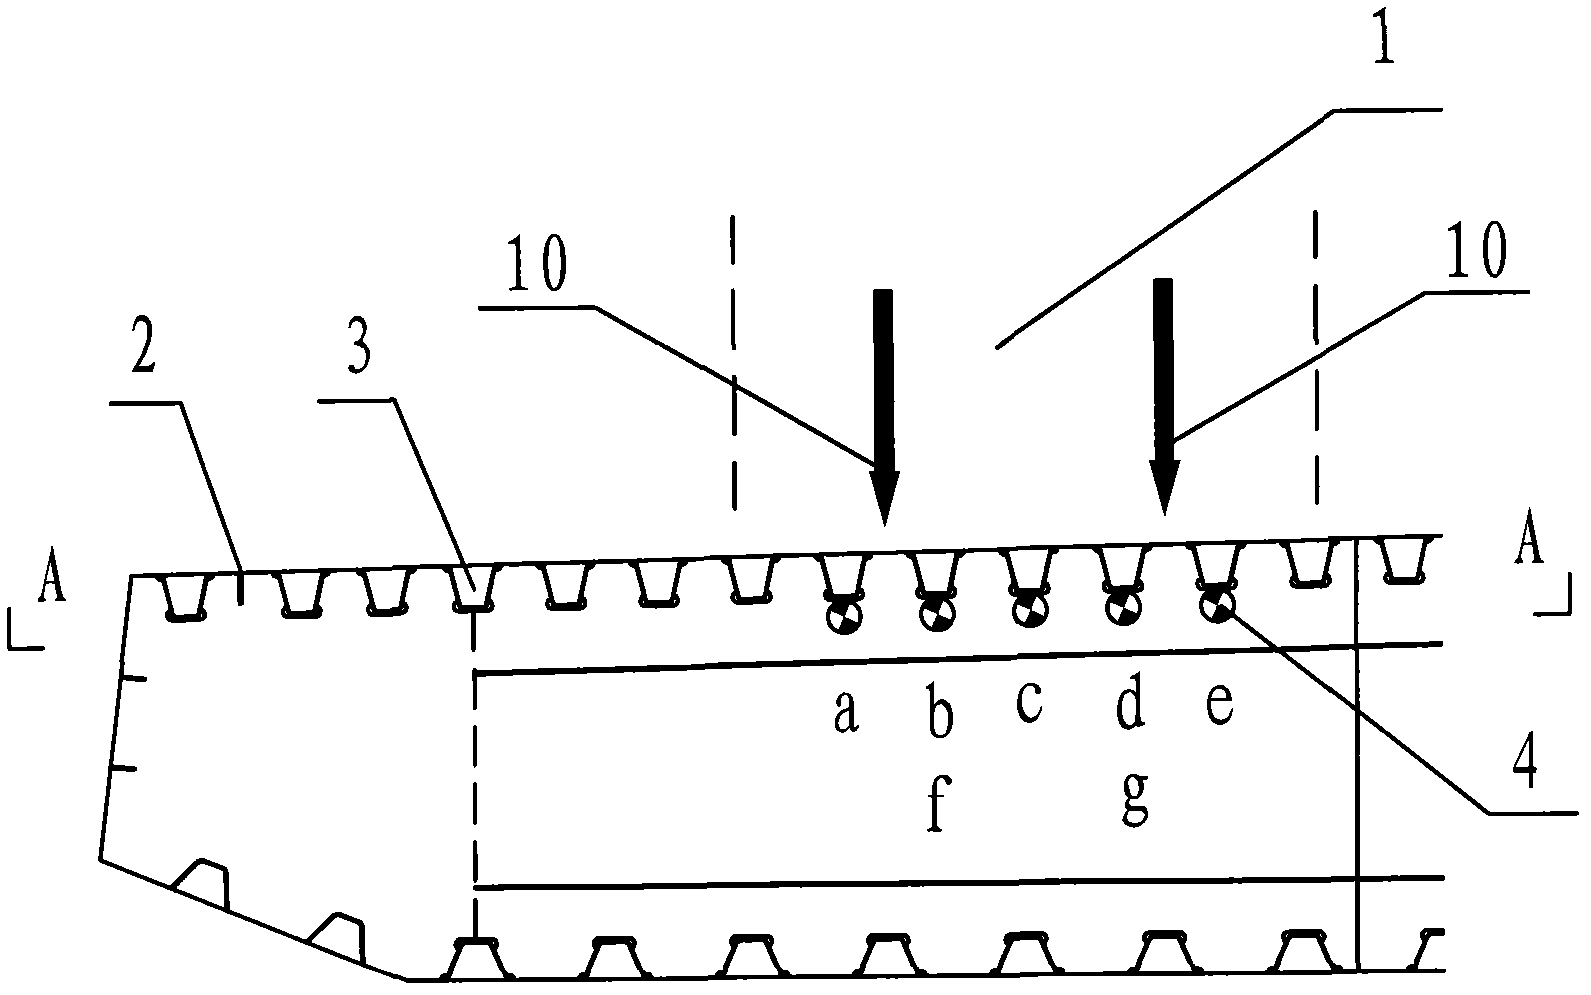 Vehicle load dynamic weighing method for orthotropic bridge deck steel box girder bridge